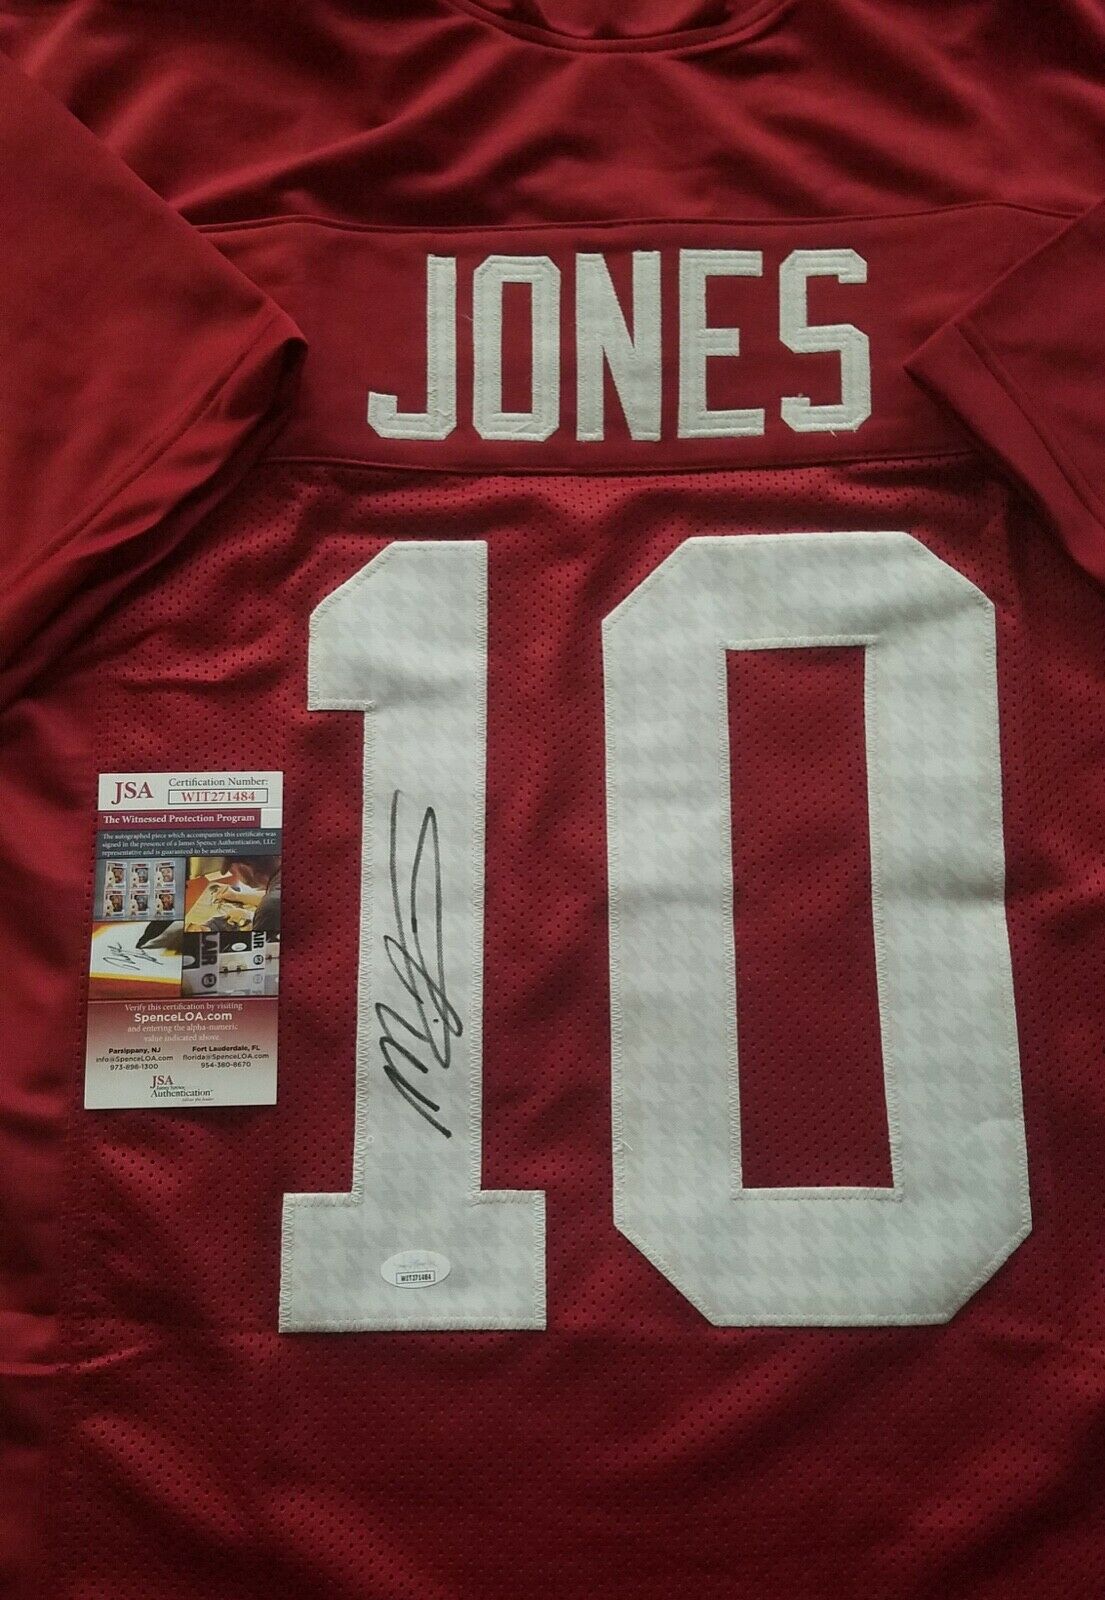 Mac Jones Autograph Signed Alabama Houndstooth Jersey Includes Jsa